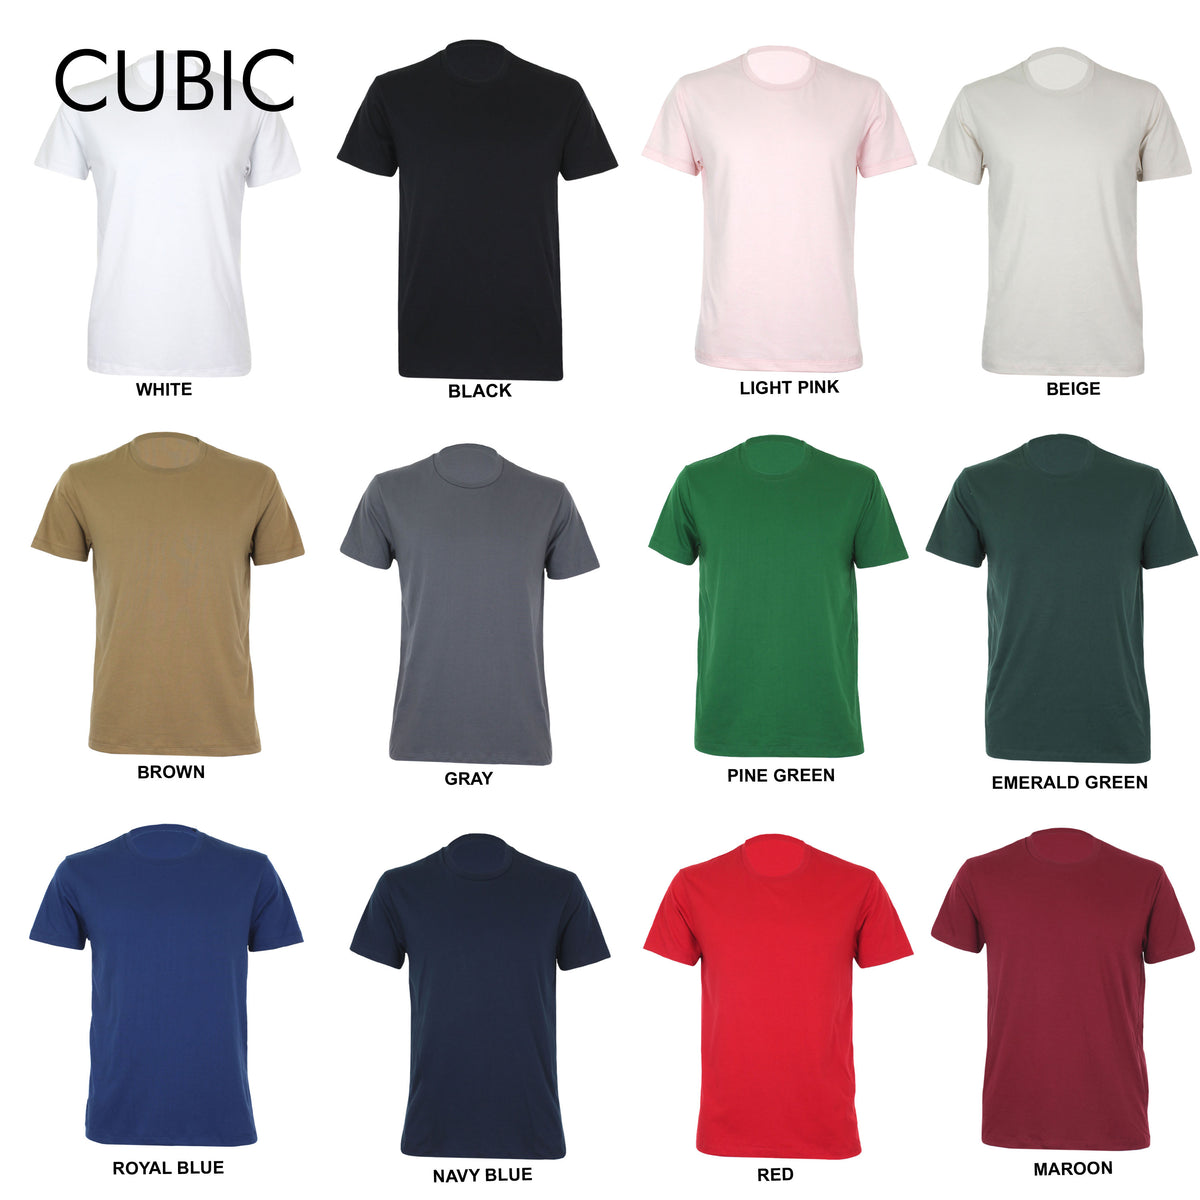 Cubic Men Plain Round Neck Basic T-Shirt Cotton Casual TShirt Plain Tee Top Top for Men - CMB-RNJ